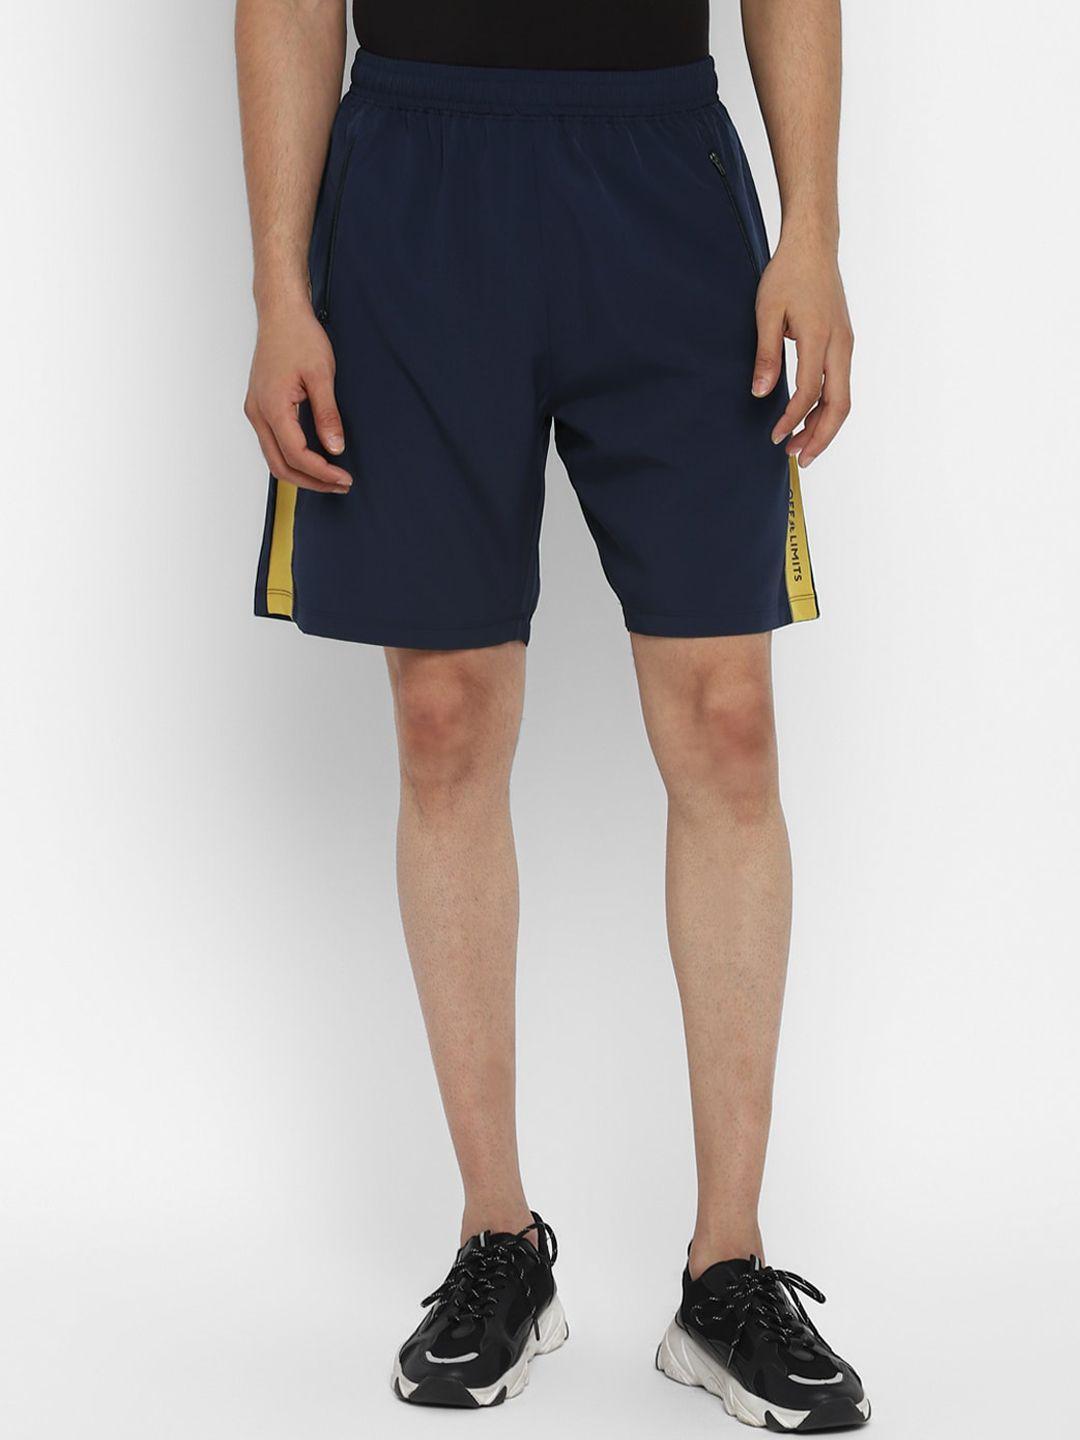 off limits men navy blue solid regular fit sports shorts